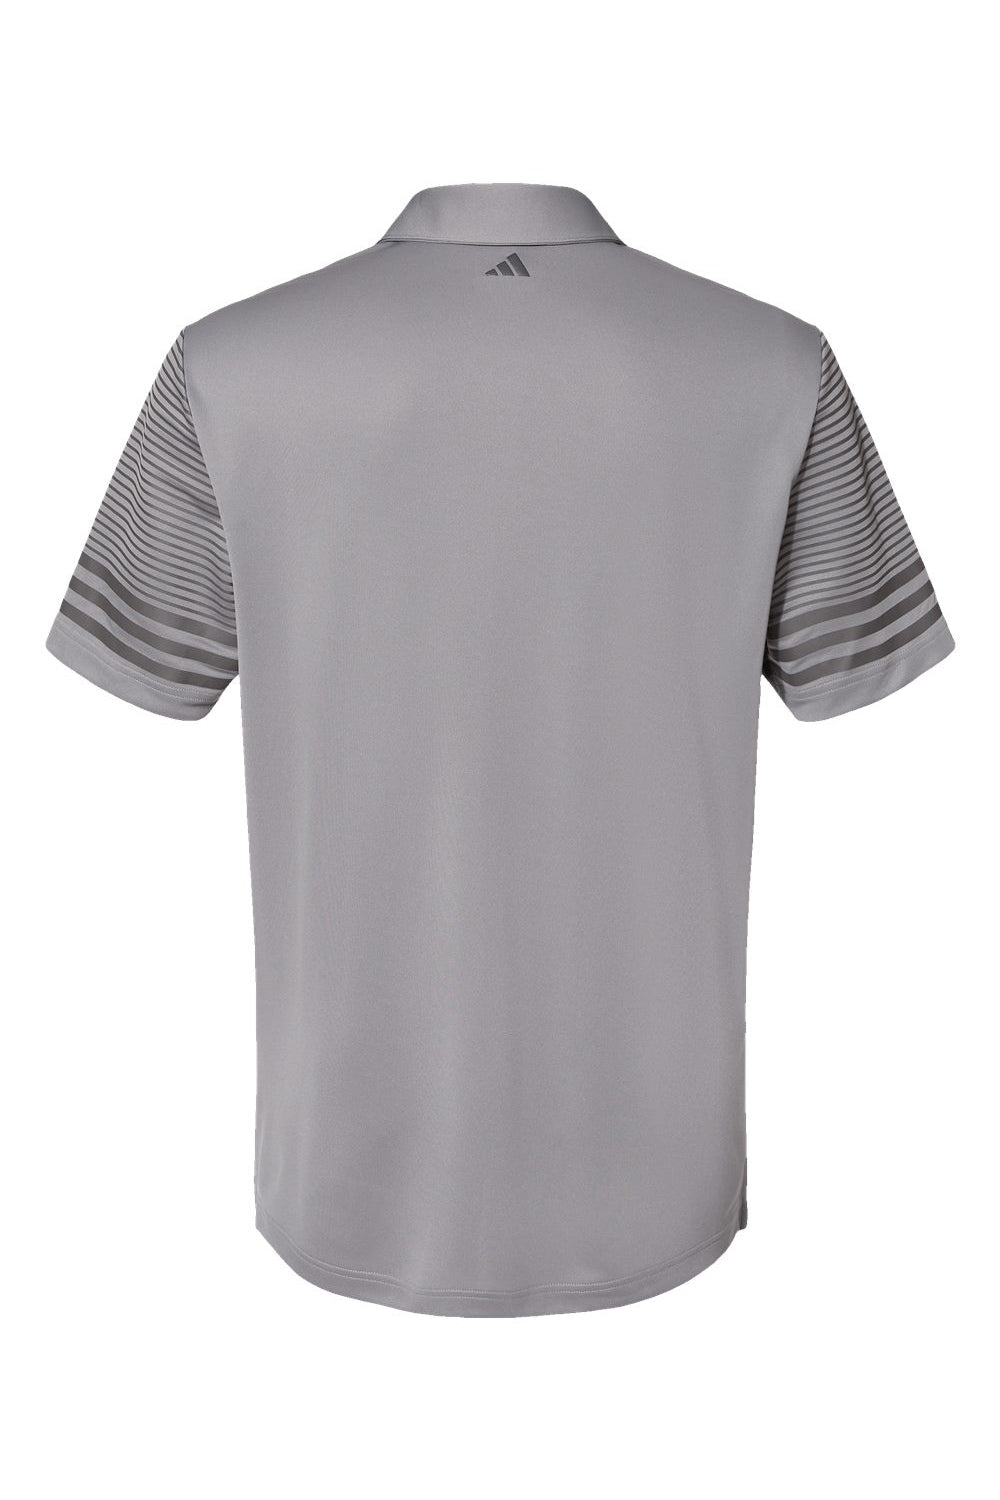 Adidas A490 Mens Striped Short Sleeve Polo Shirt Grey/Grey Flat Back